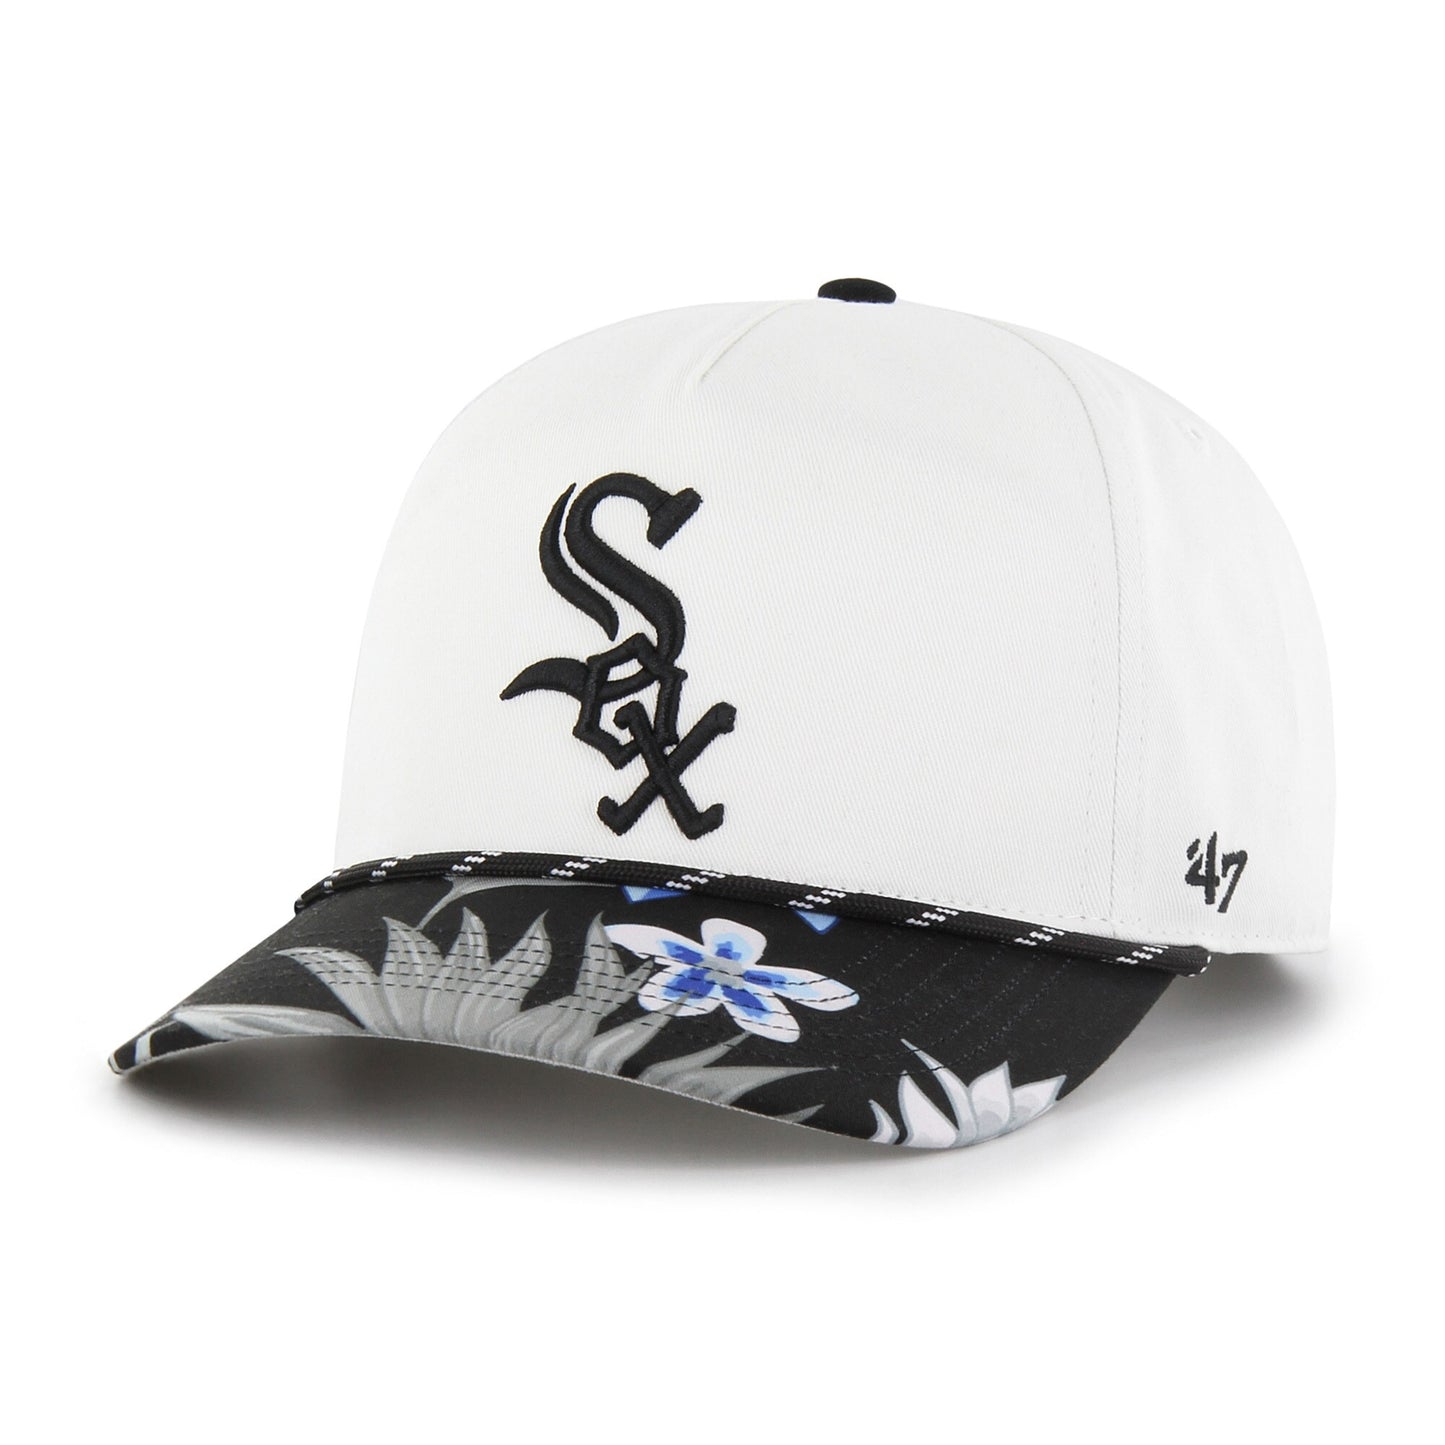 Chicago White Sox '47 Dark Tropic Hitch Snapback Hat - White